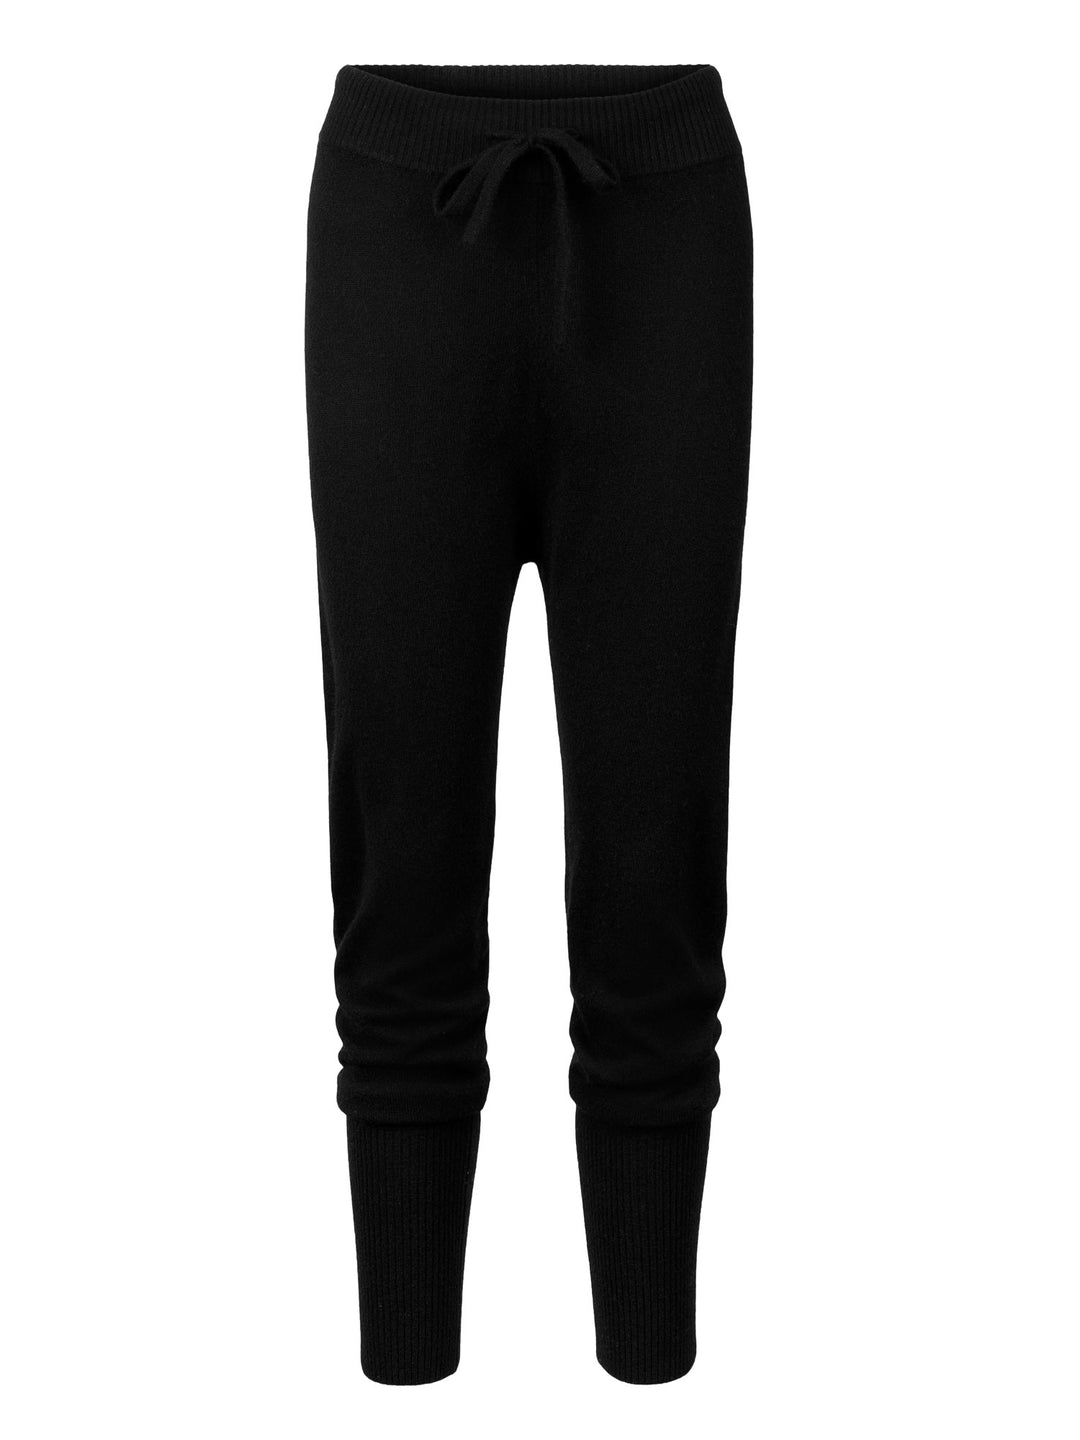 Cashmere pants "Chill" in 100% pure cashmere. Color: Black.  Scandinavian design by Kashmina.